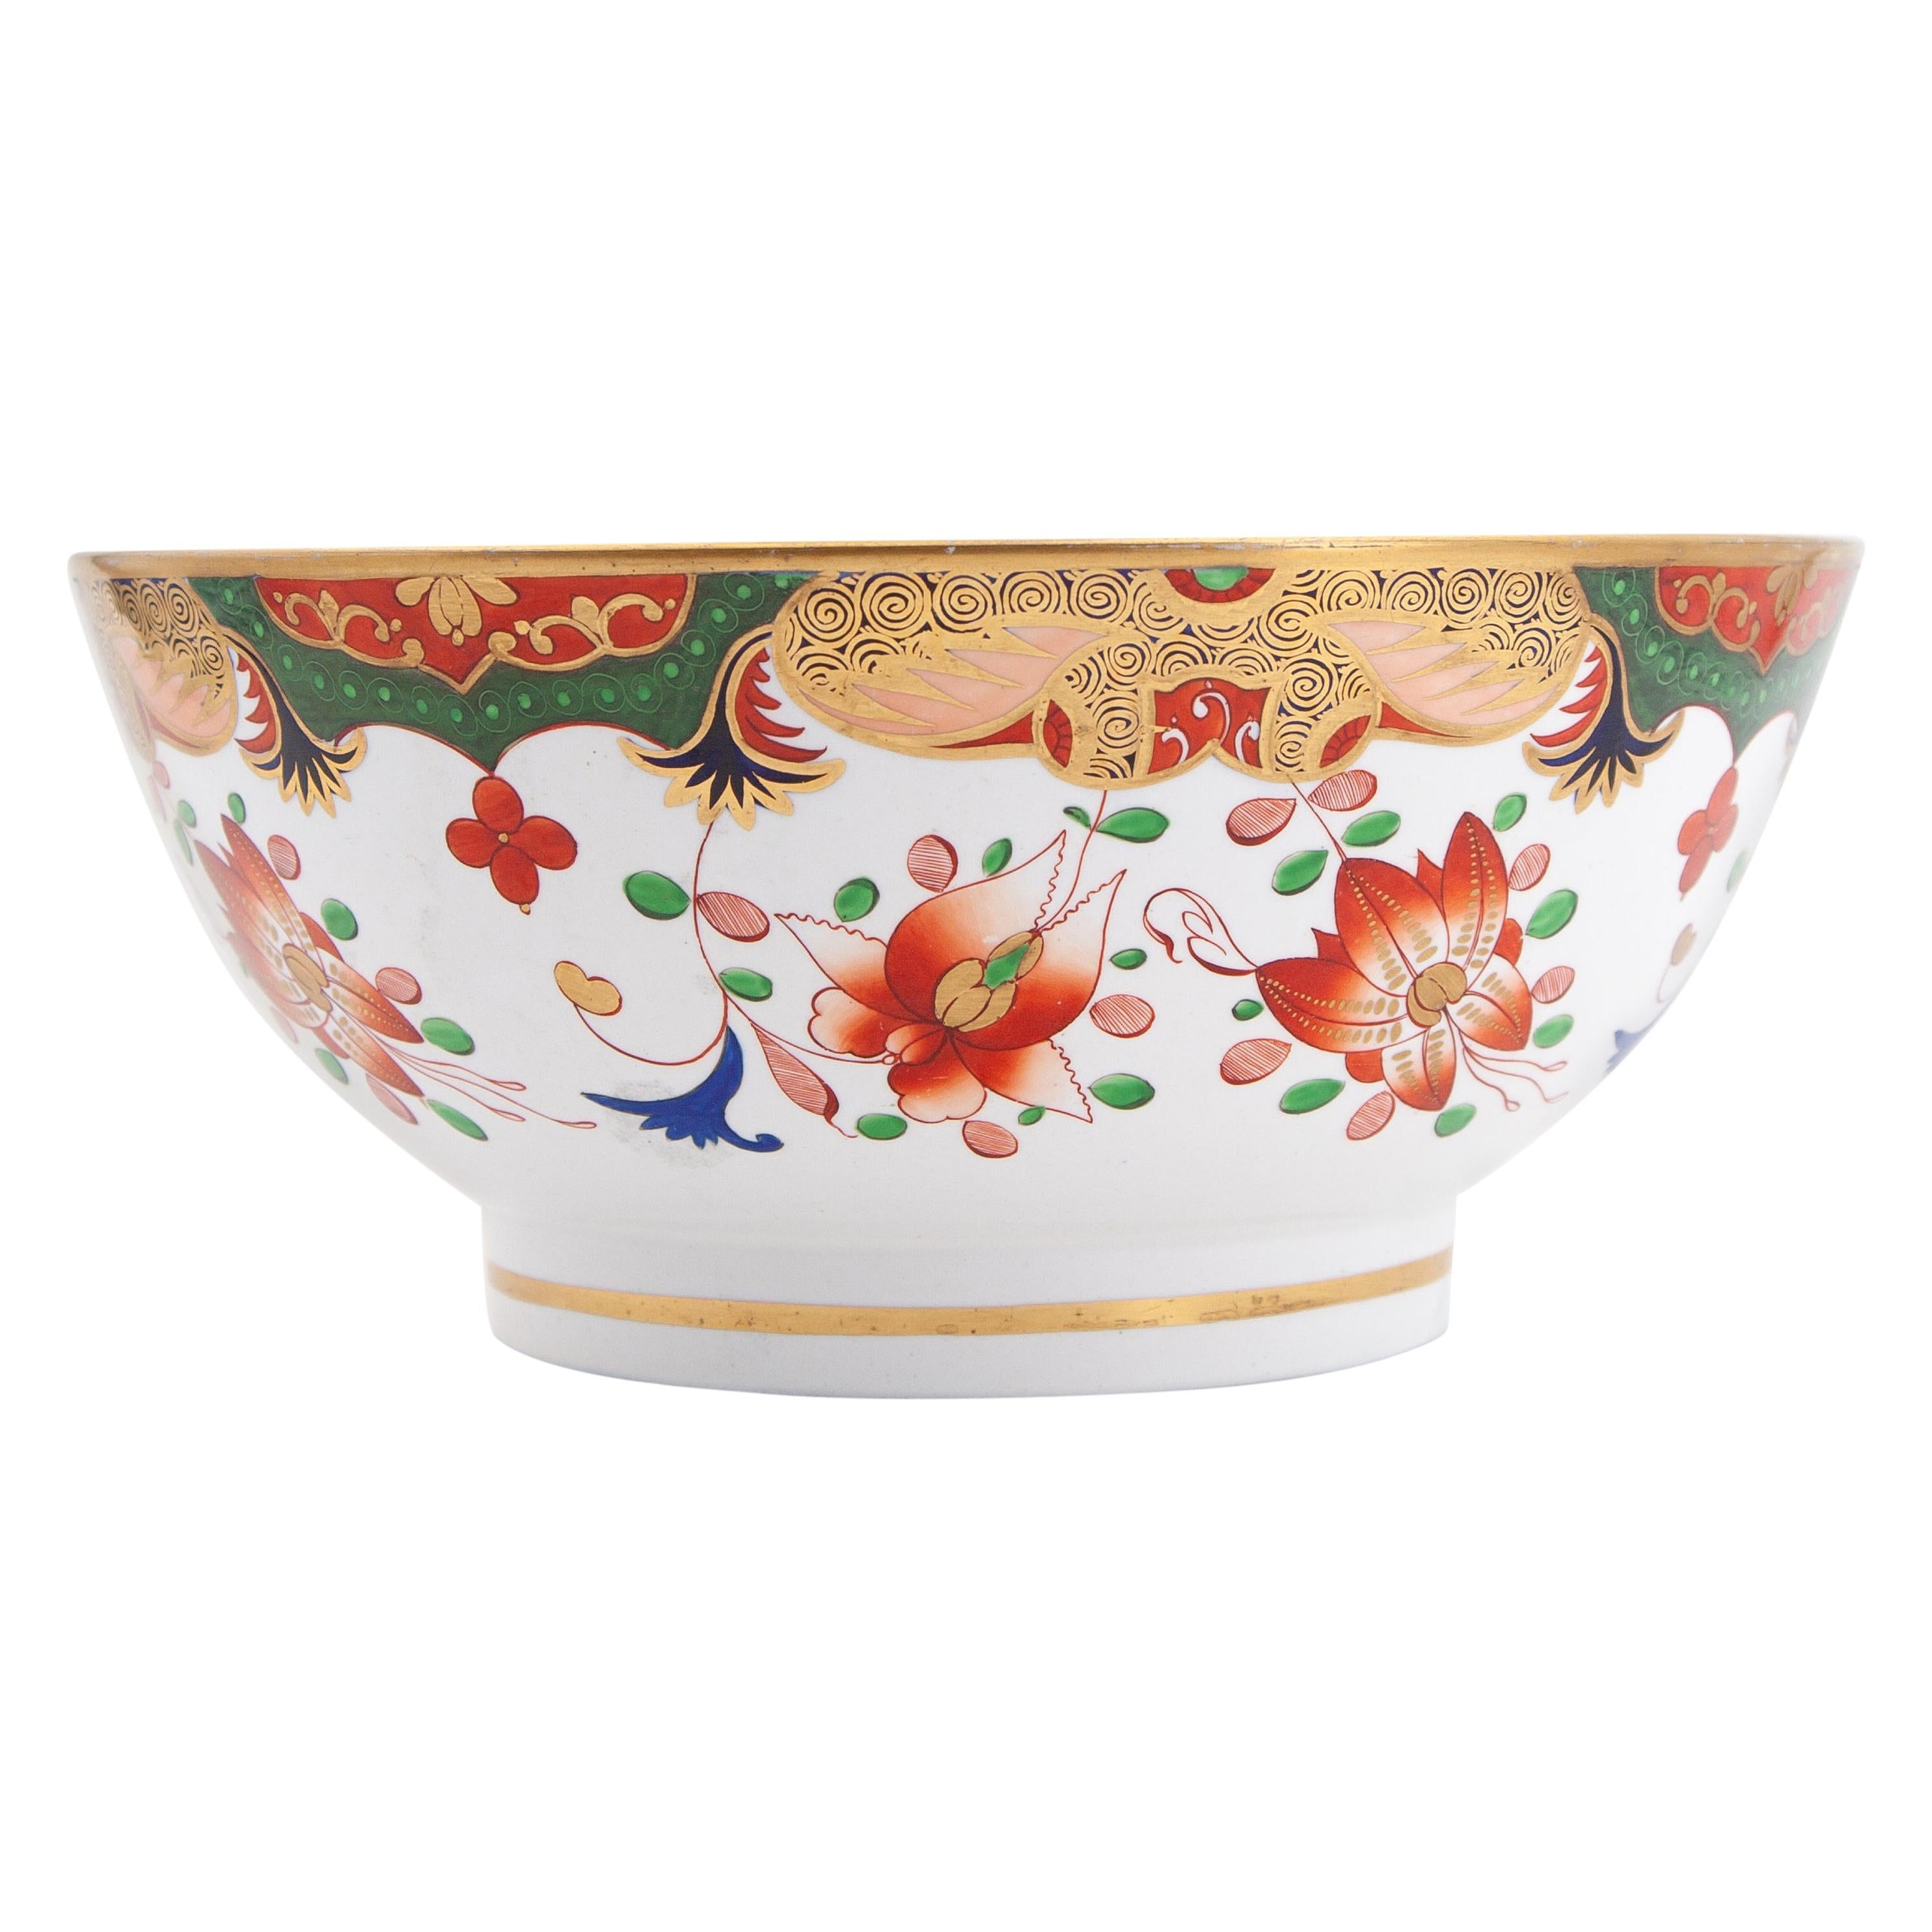 Early 19th Century Spode Porcelain Regency Punch Bowl